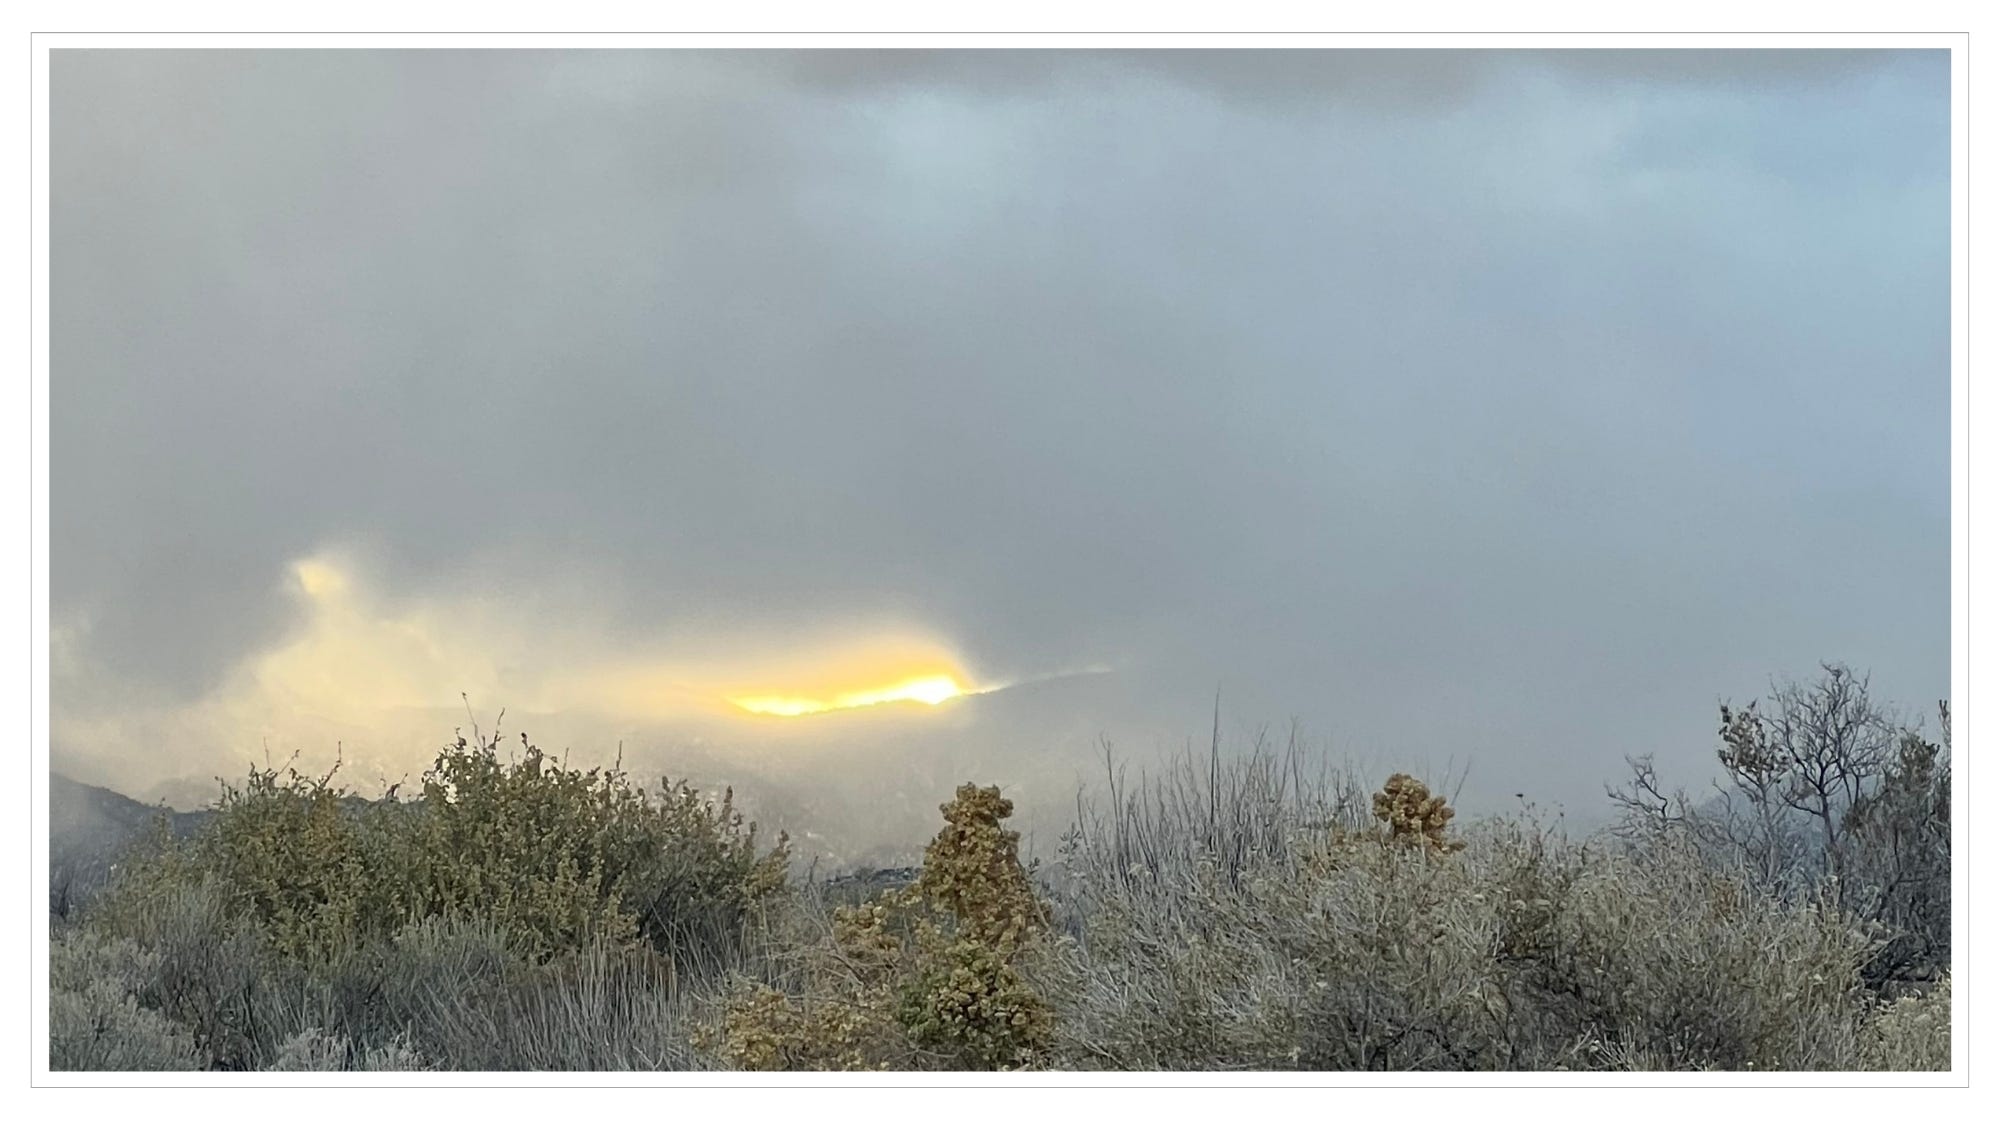 frosty desert, light breaking through morning clouds